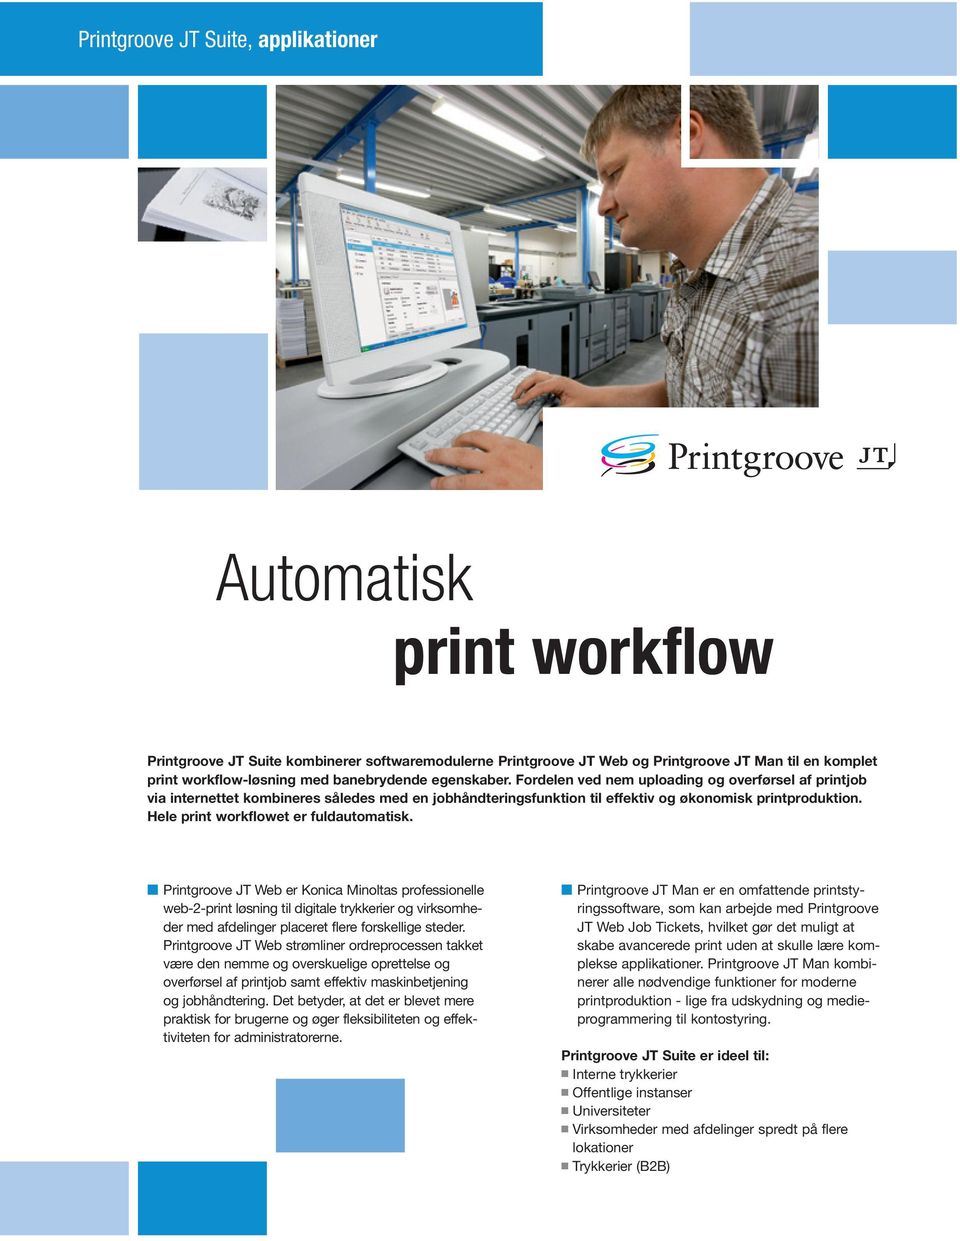 Hele print workflowet er fuldautomatisk.